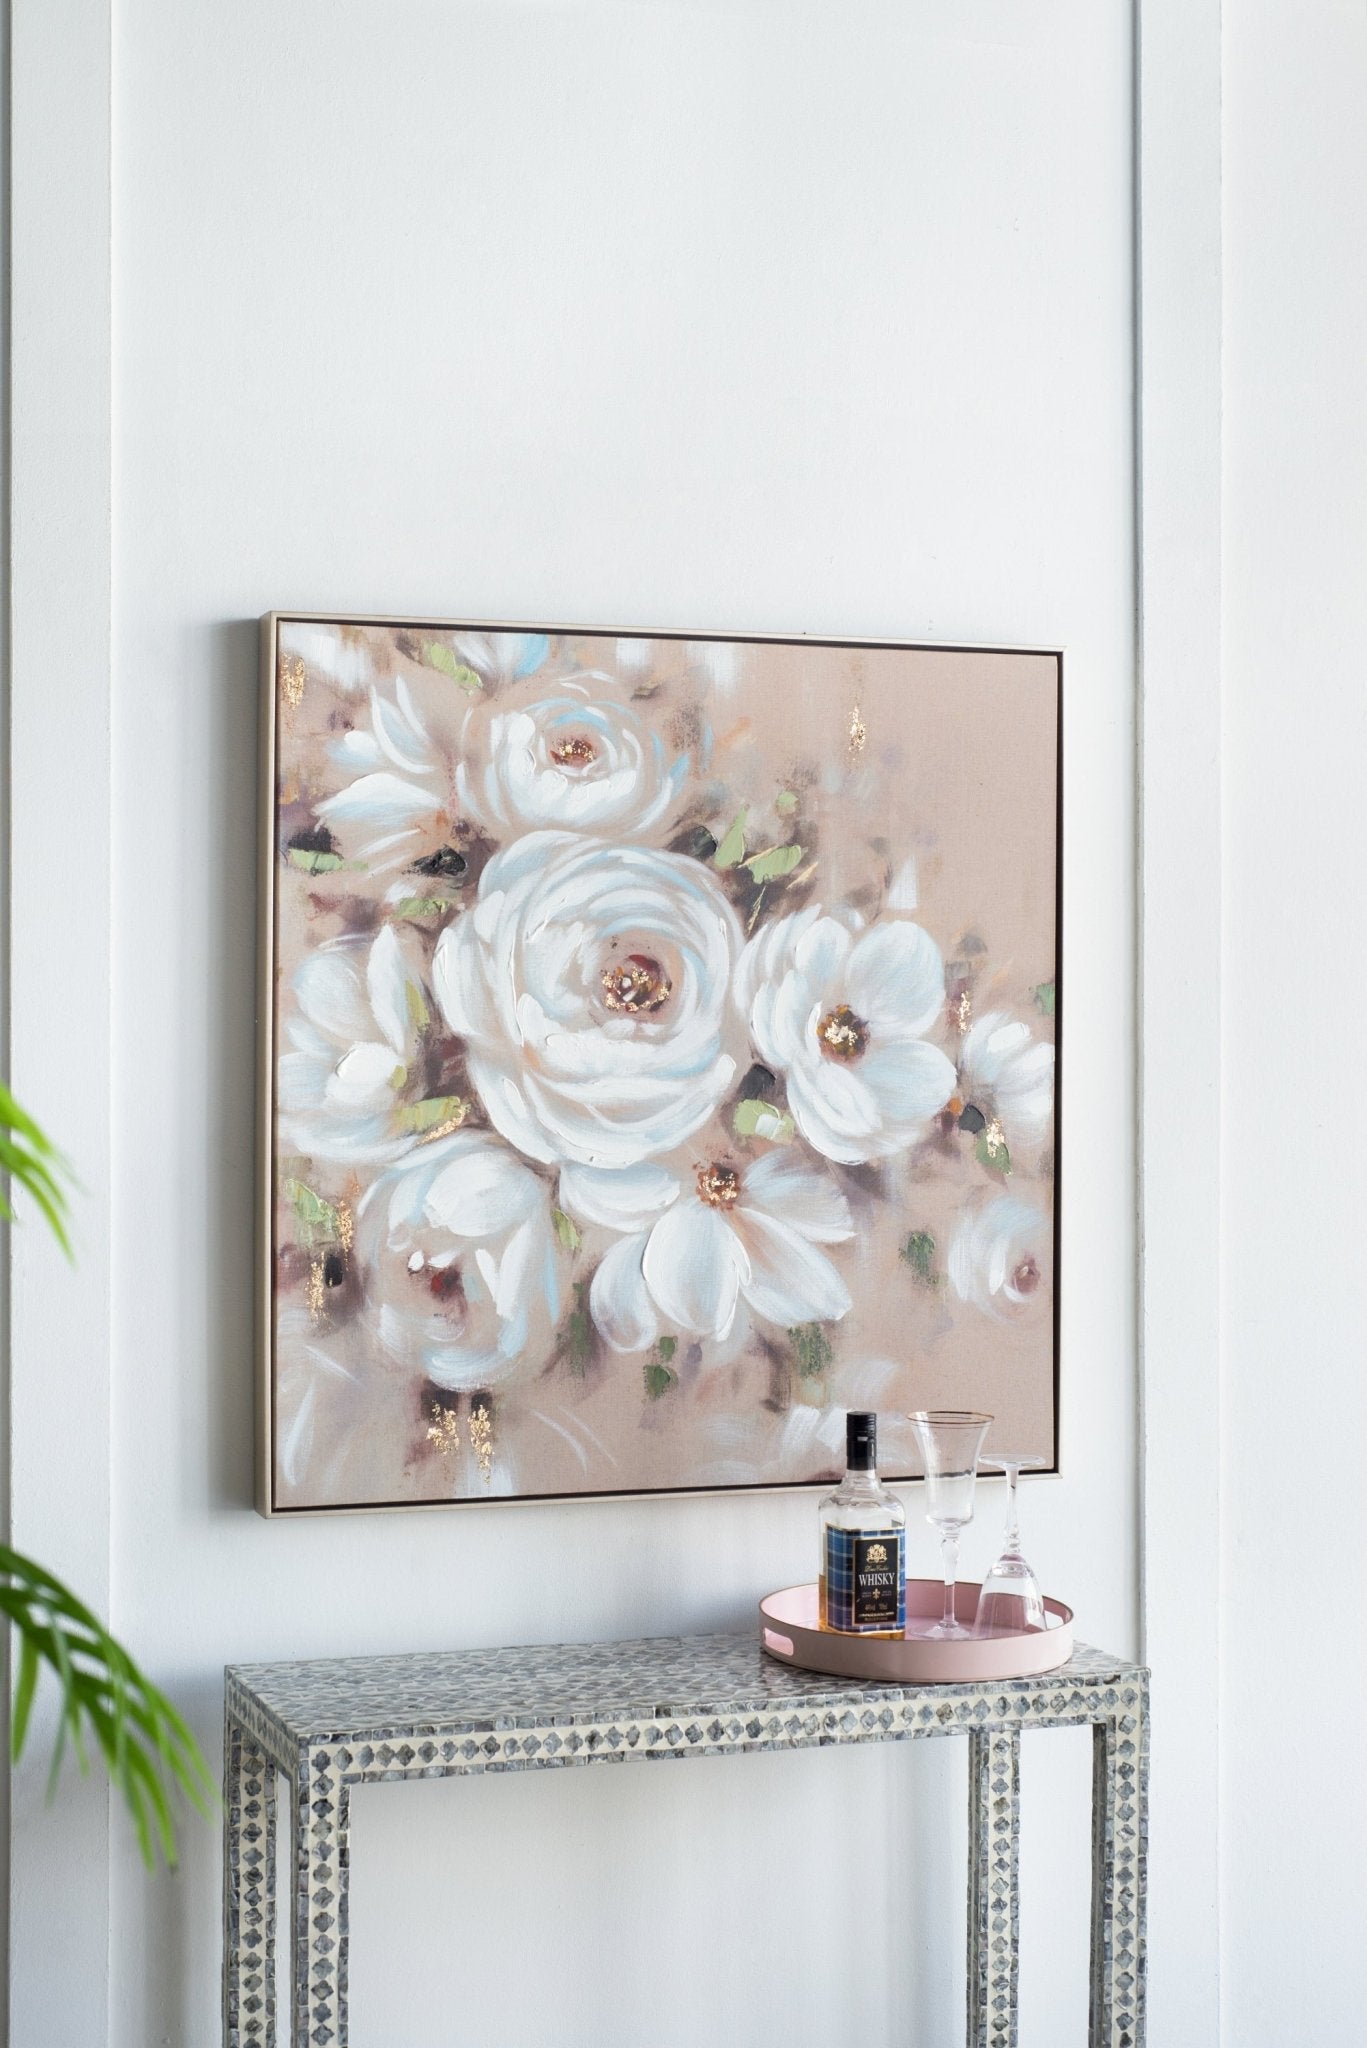 36" x 36" Square Framed Wall Art Flower Canvas Print, Home Decor for Living Room Kitchen Foyer Office